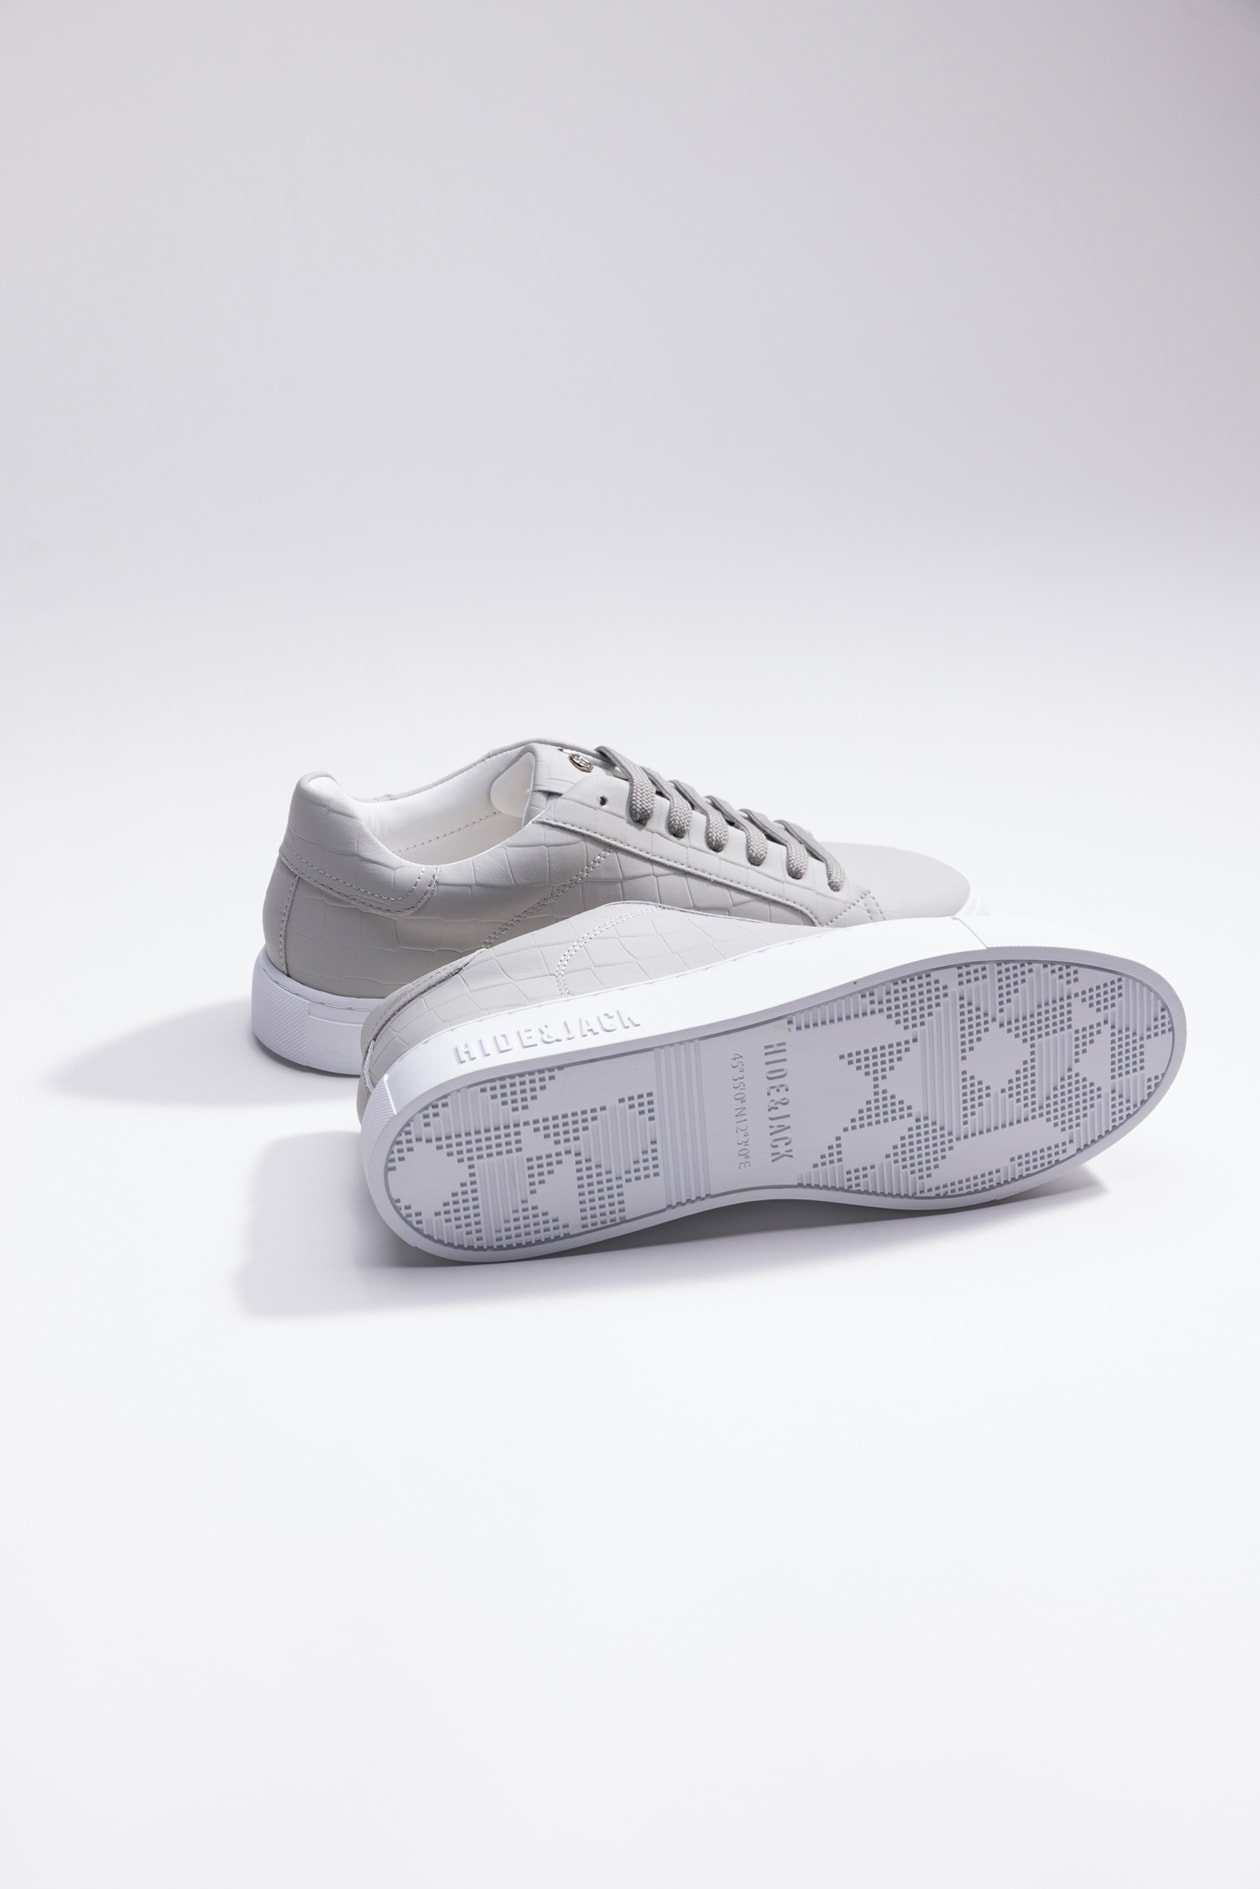 Hide&amp;jack Low Top Sneaker - Essence Grey White